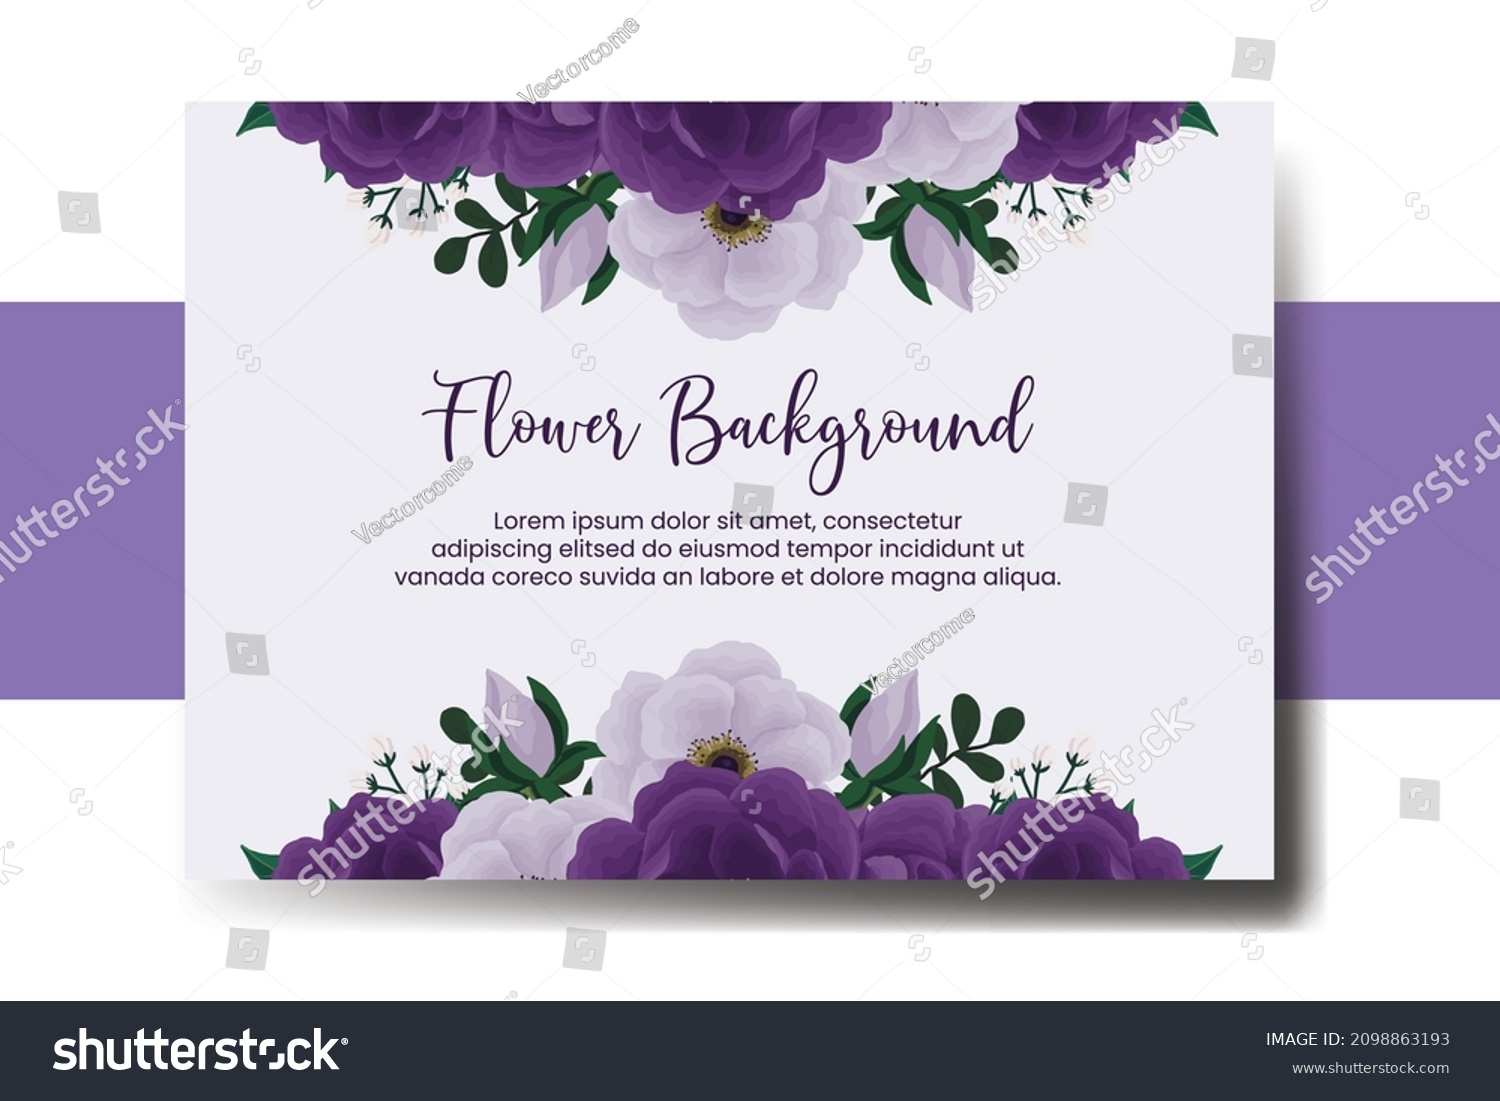 SVG of Wedding banner flower background, Digital watercolor hand drawn Purple Peony Flower design Template svg